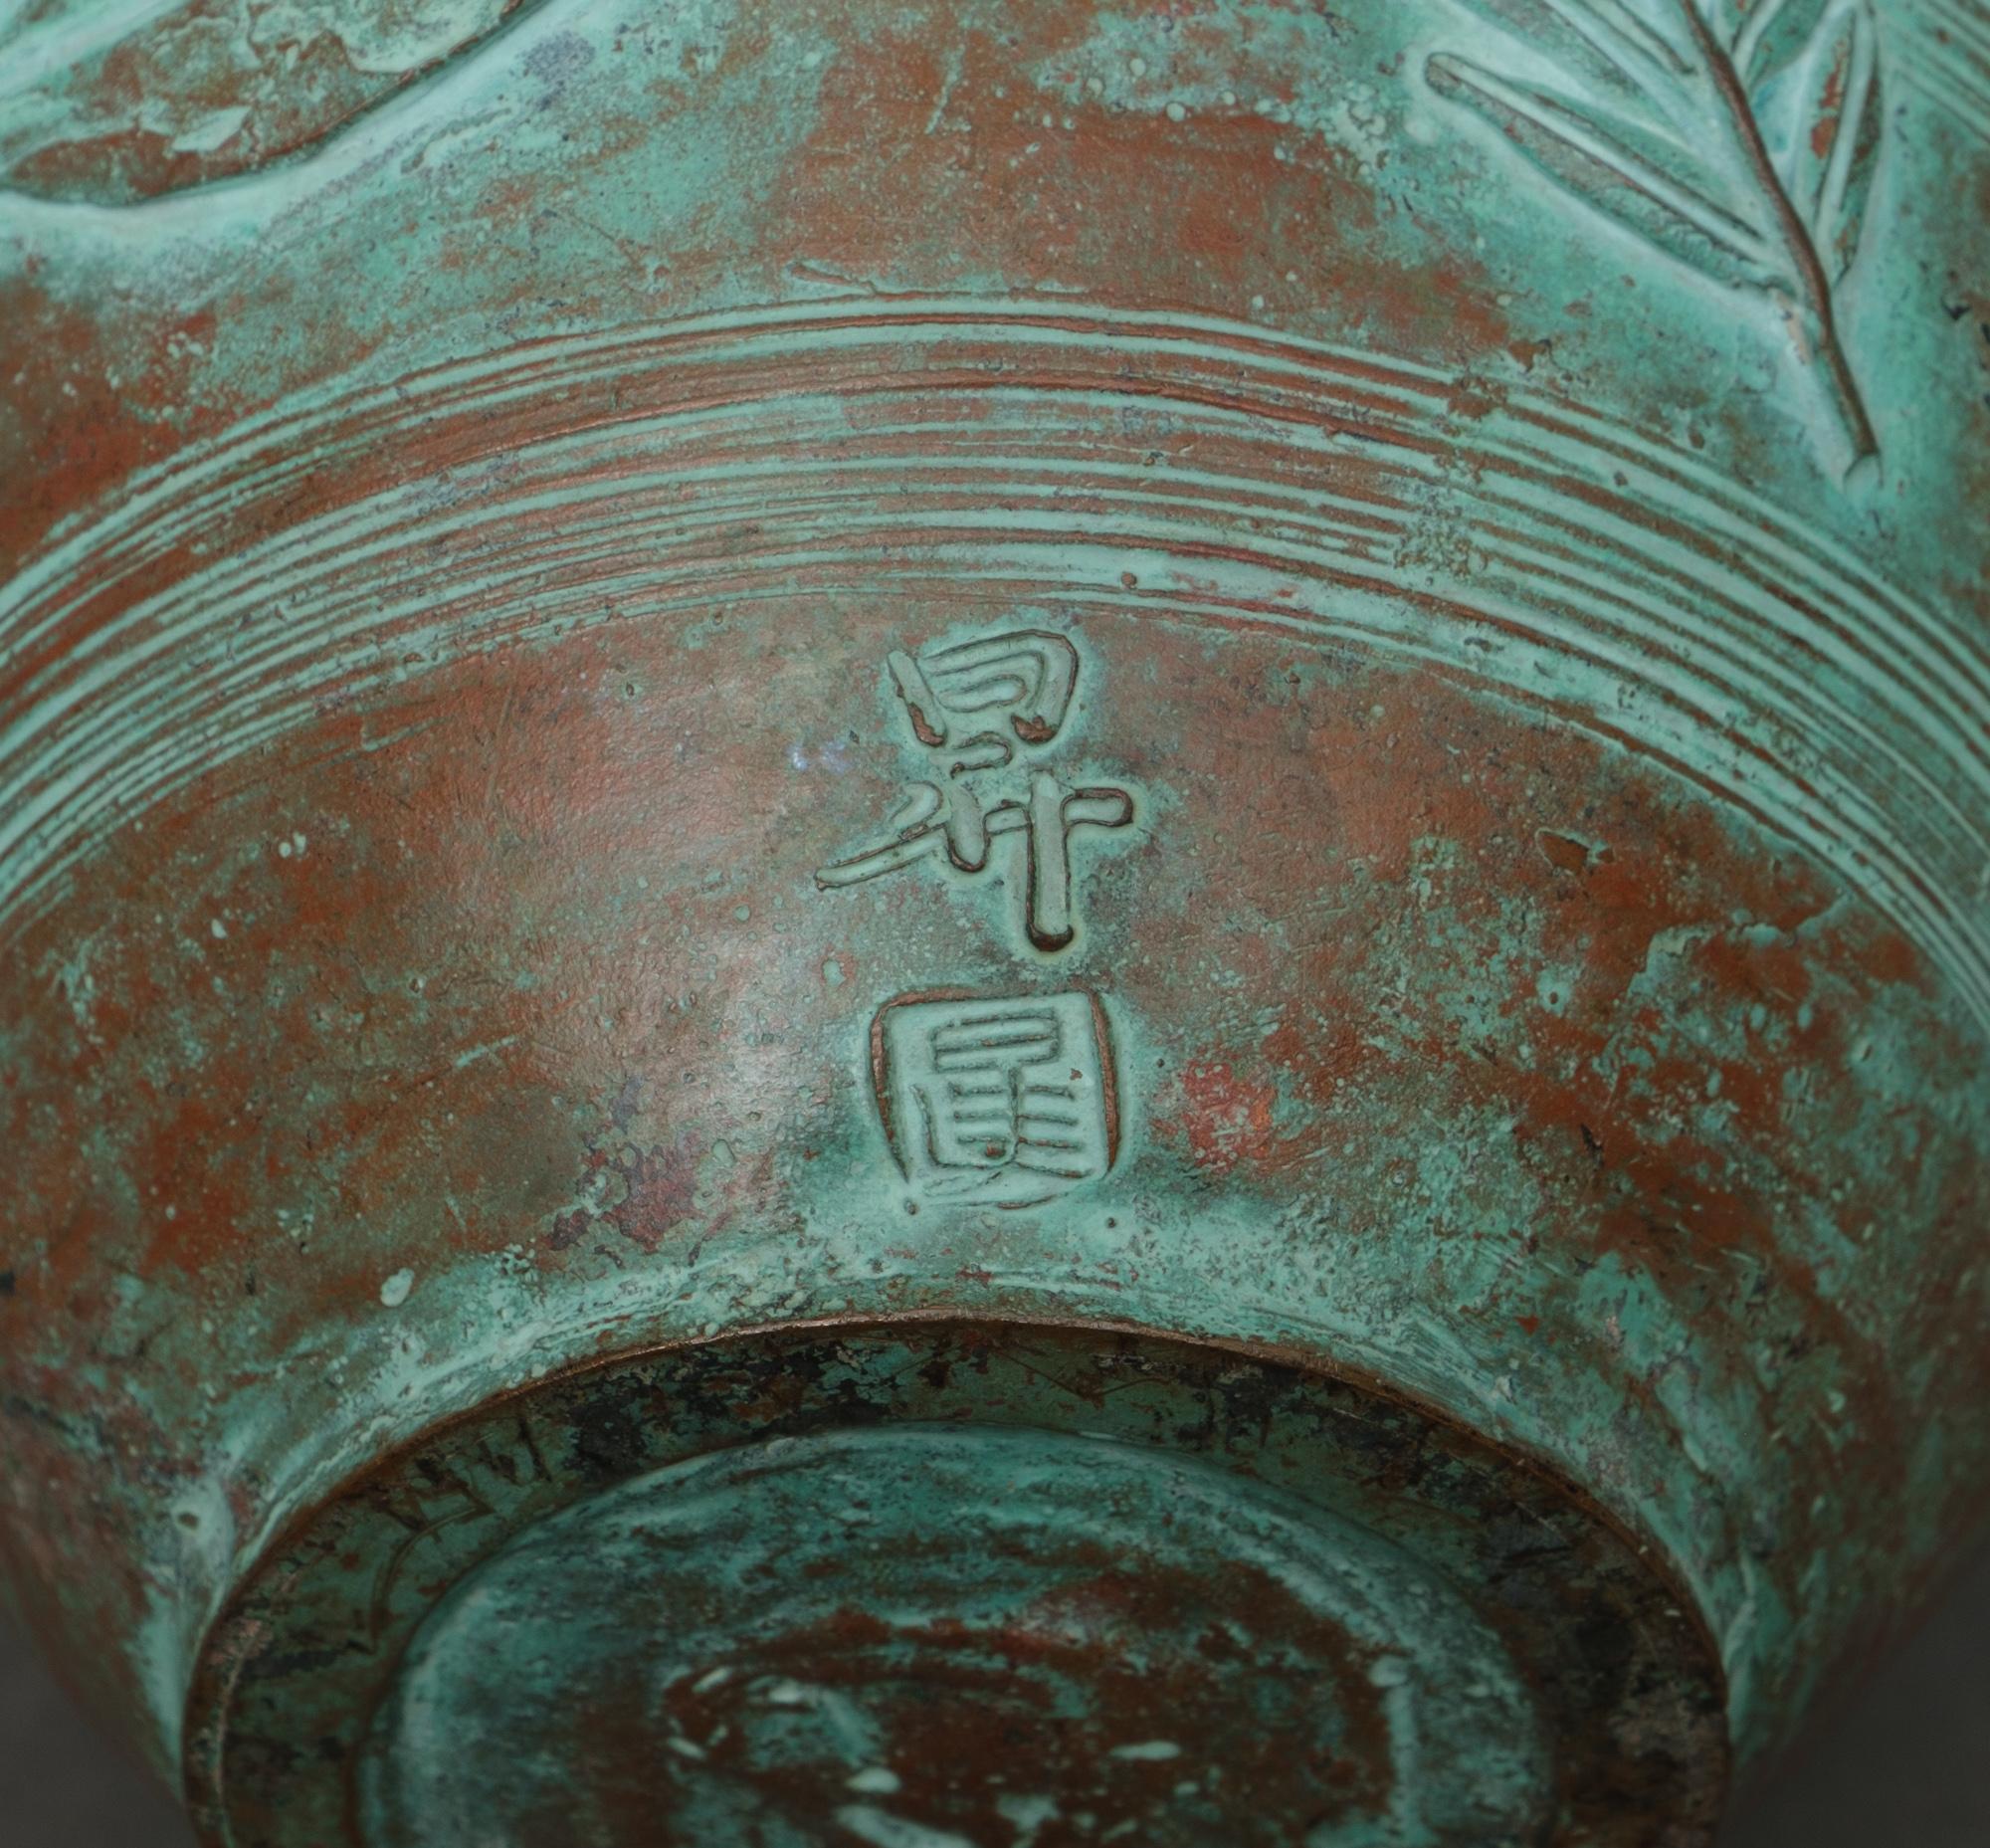 Bronze Ovoid Vase with High Relief Leaf Design by Nitten Artist Hirai Noboru 平井昇 For Sale 3